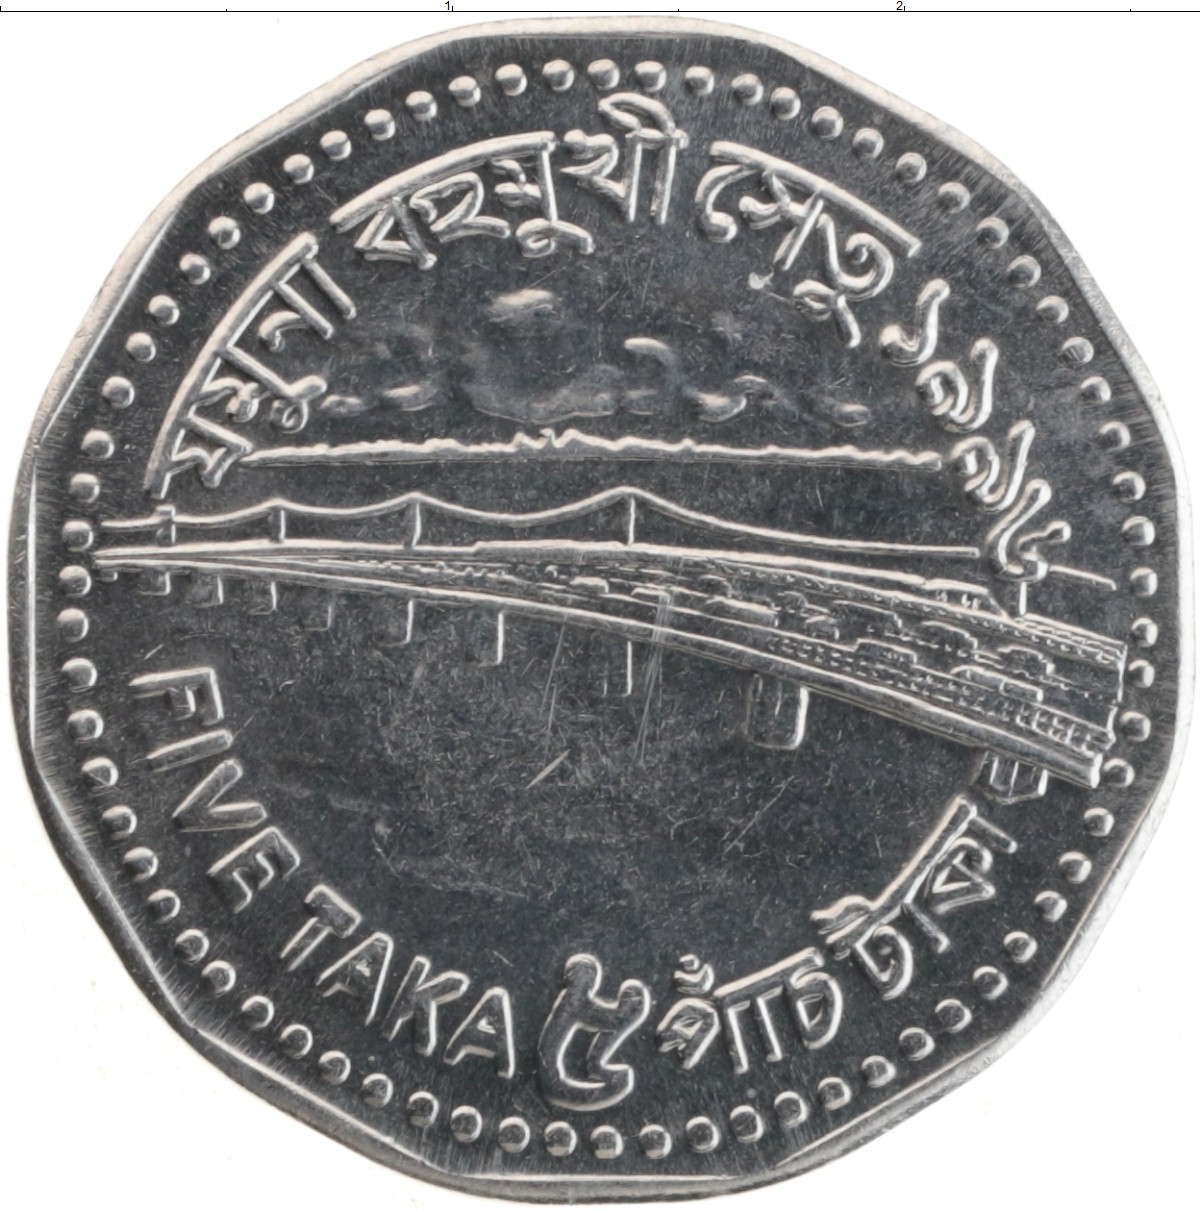 Таку 5. Five taka монета. 5 Така Бангладеш. Бангладеш 5 така 1996. Монеты Бангладеш.